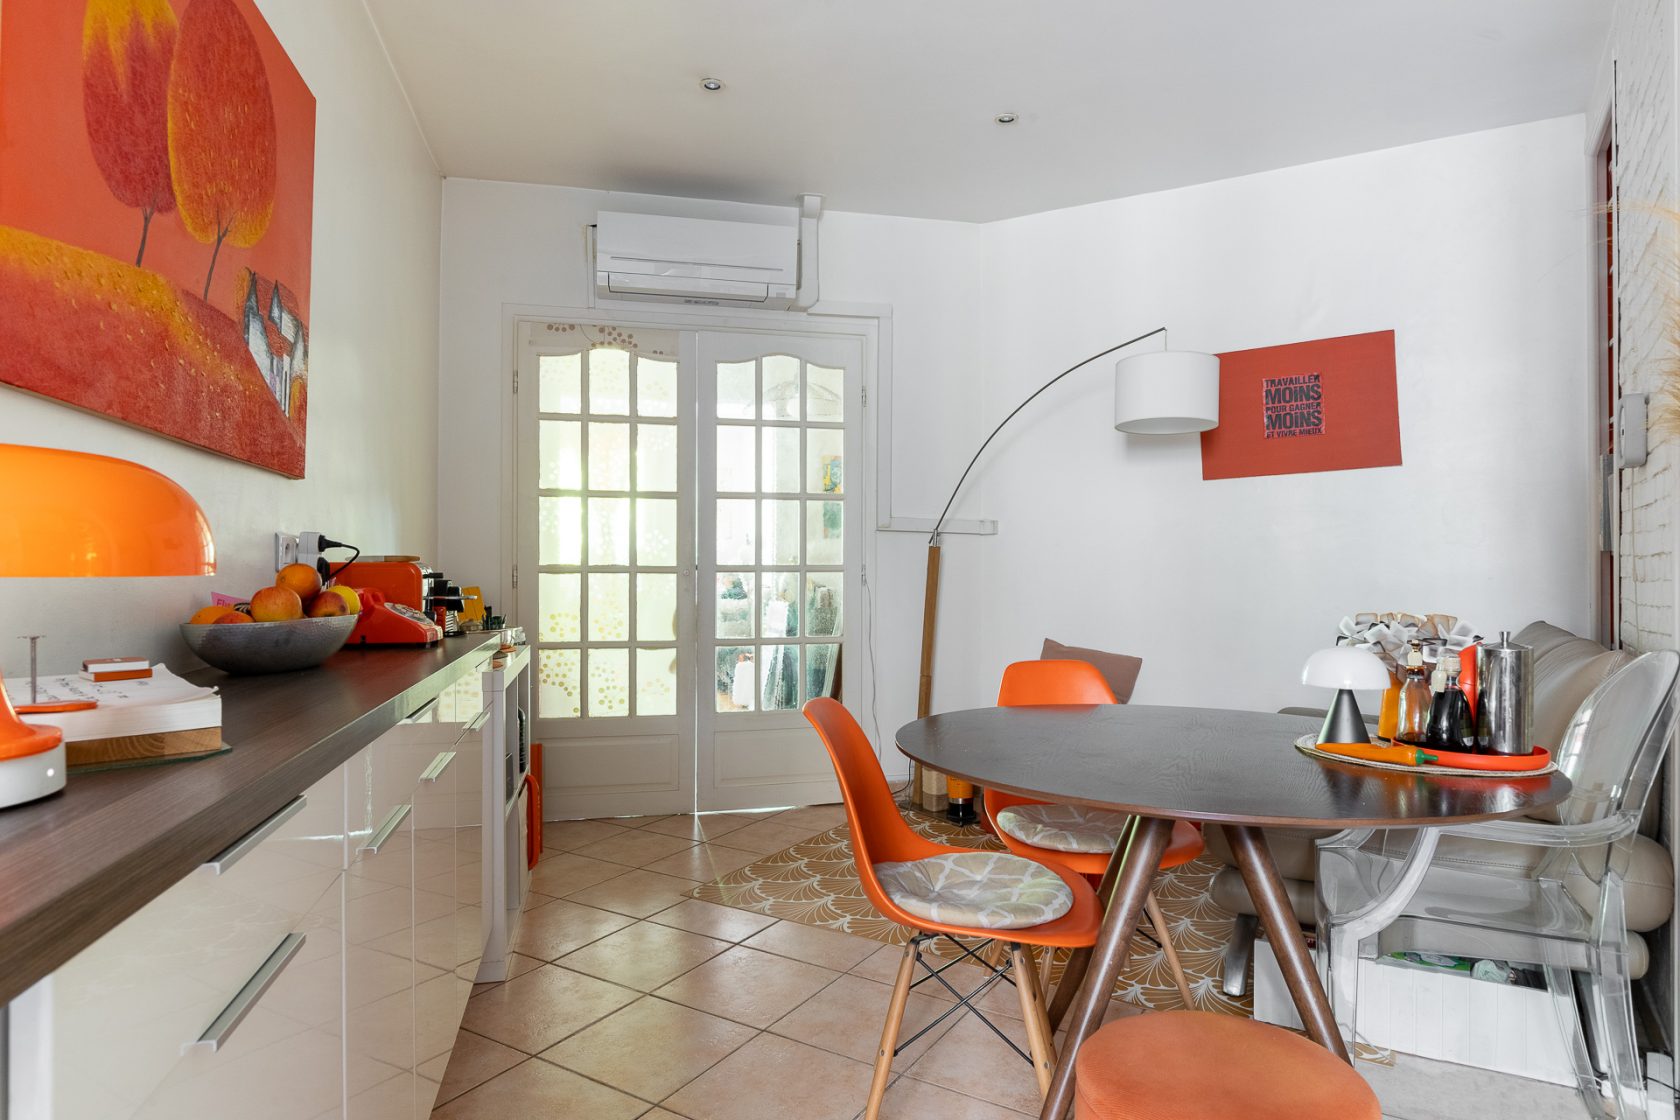 Climatized “Art Deco” apartment in Porte de Champerret